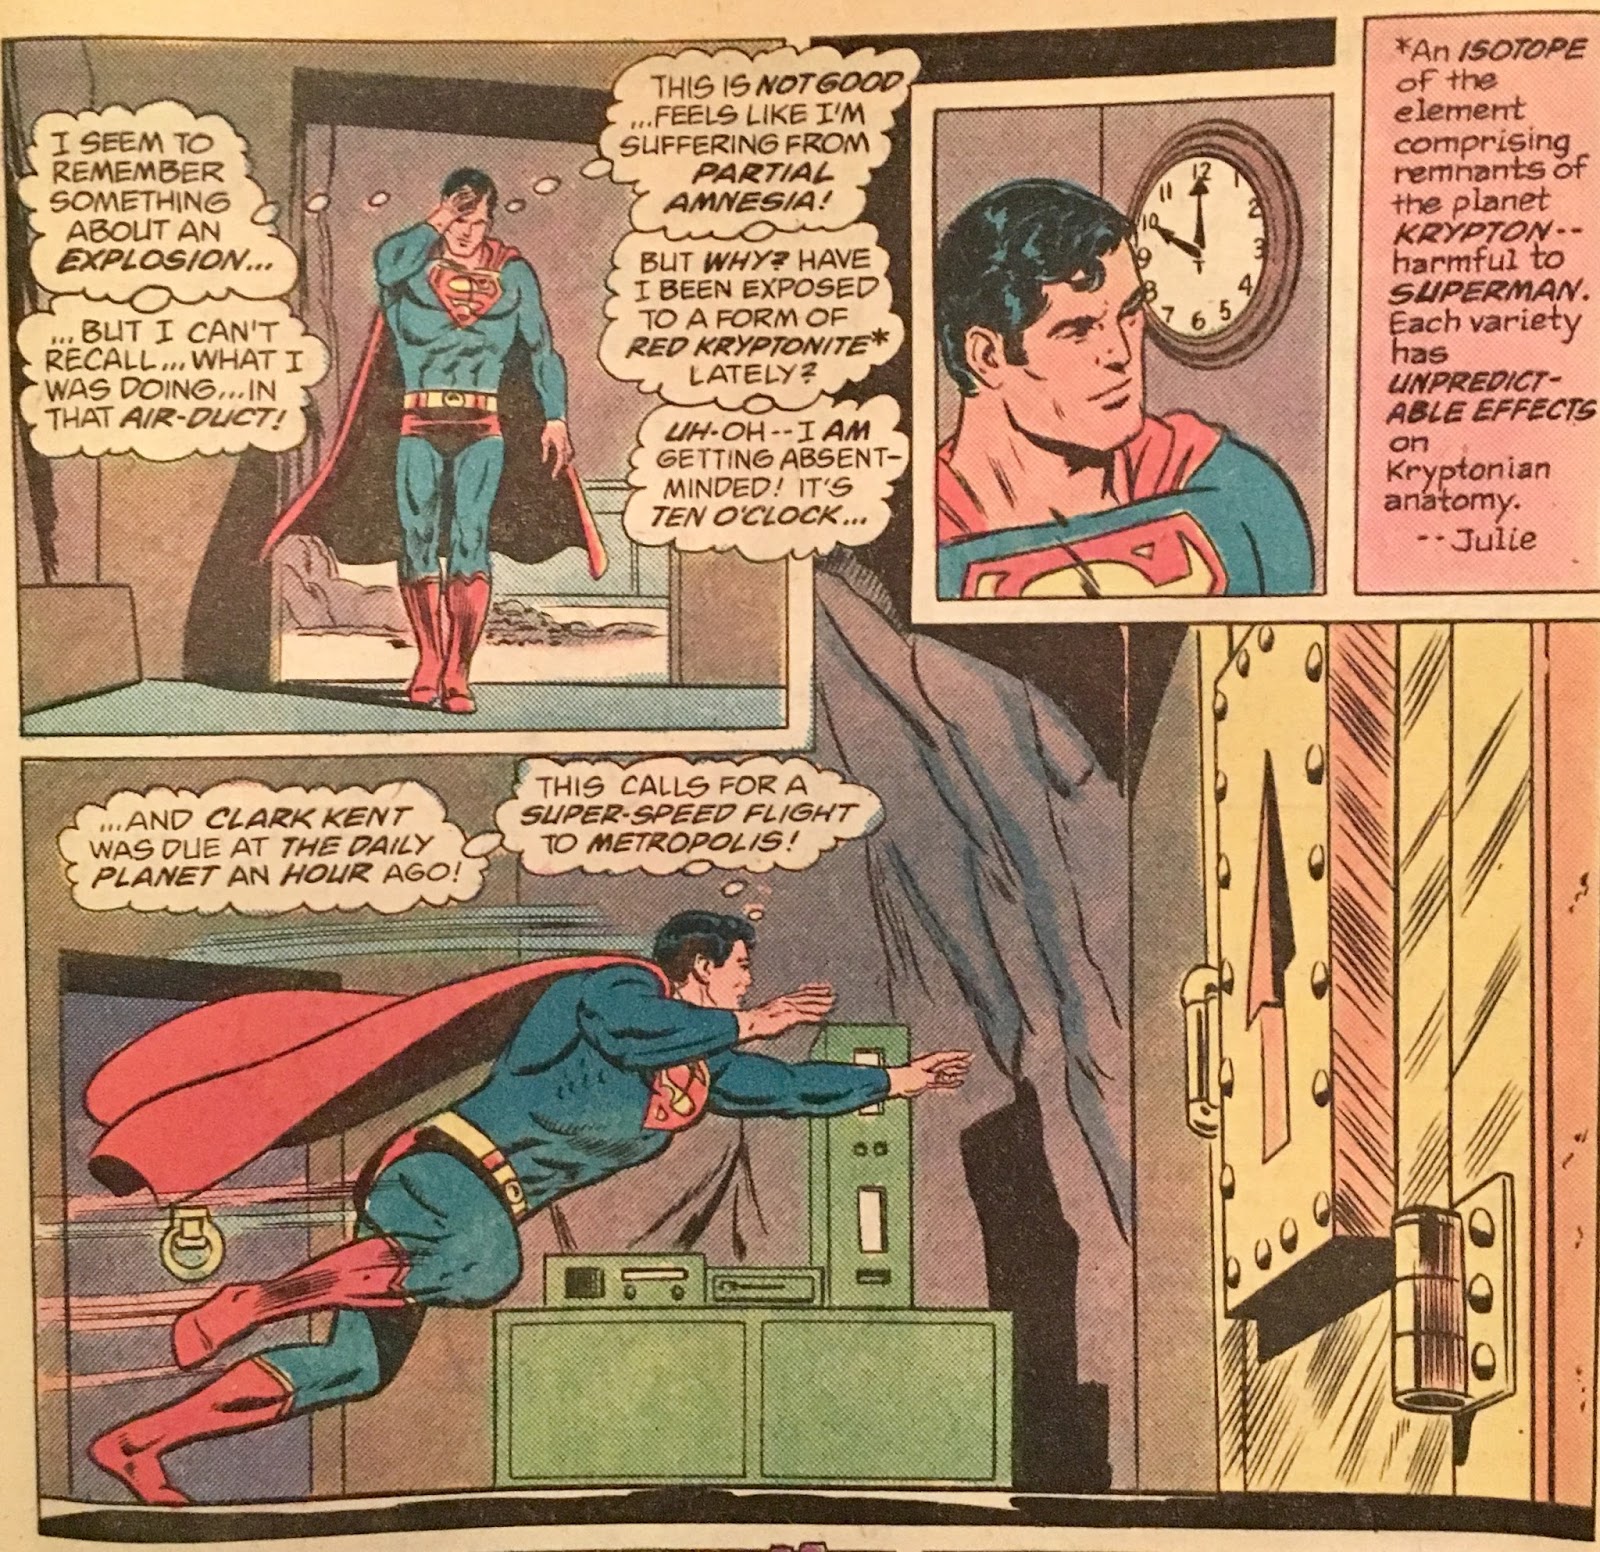 Action Comics #524 (1981) - Chris is on Infinite Earths